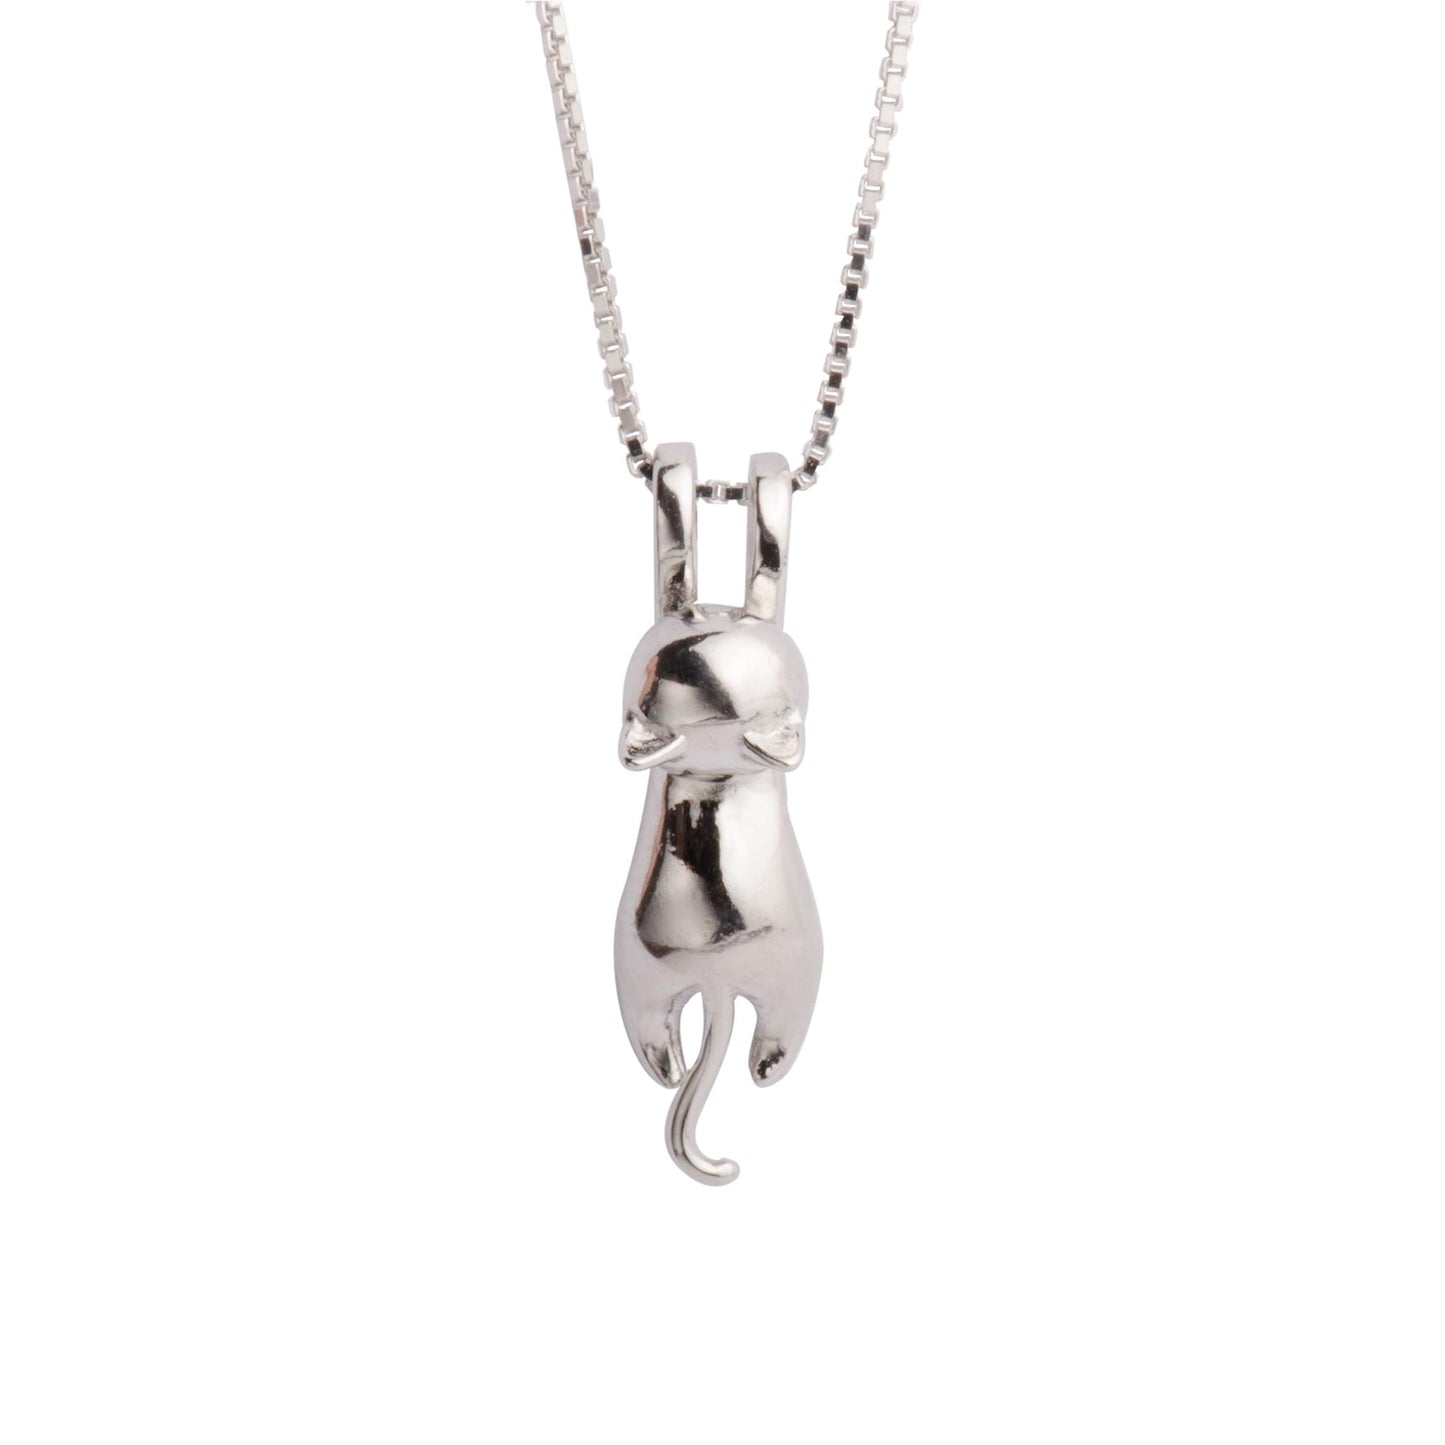 Silver Cat Pendant Necklace - getallfun